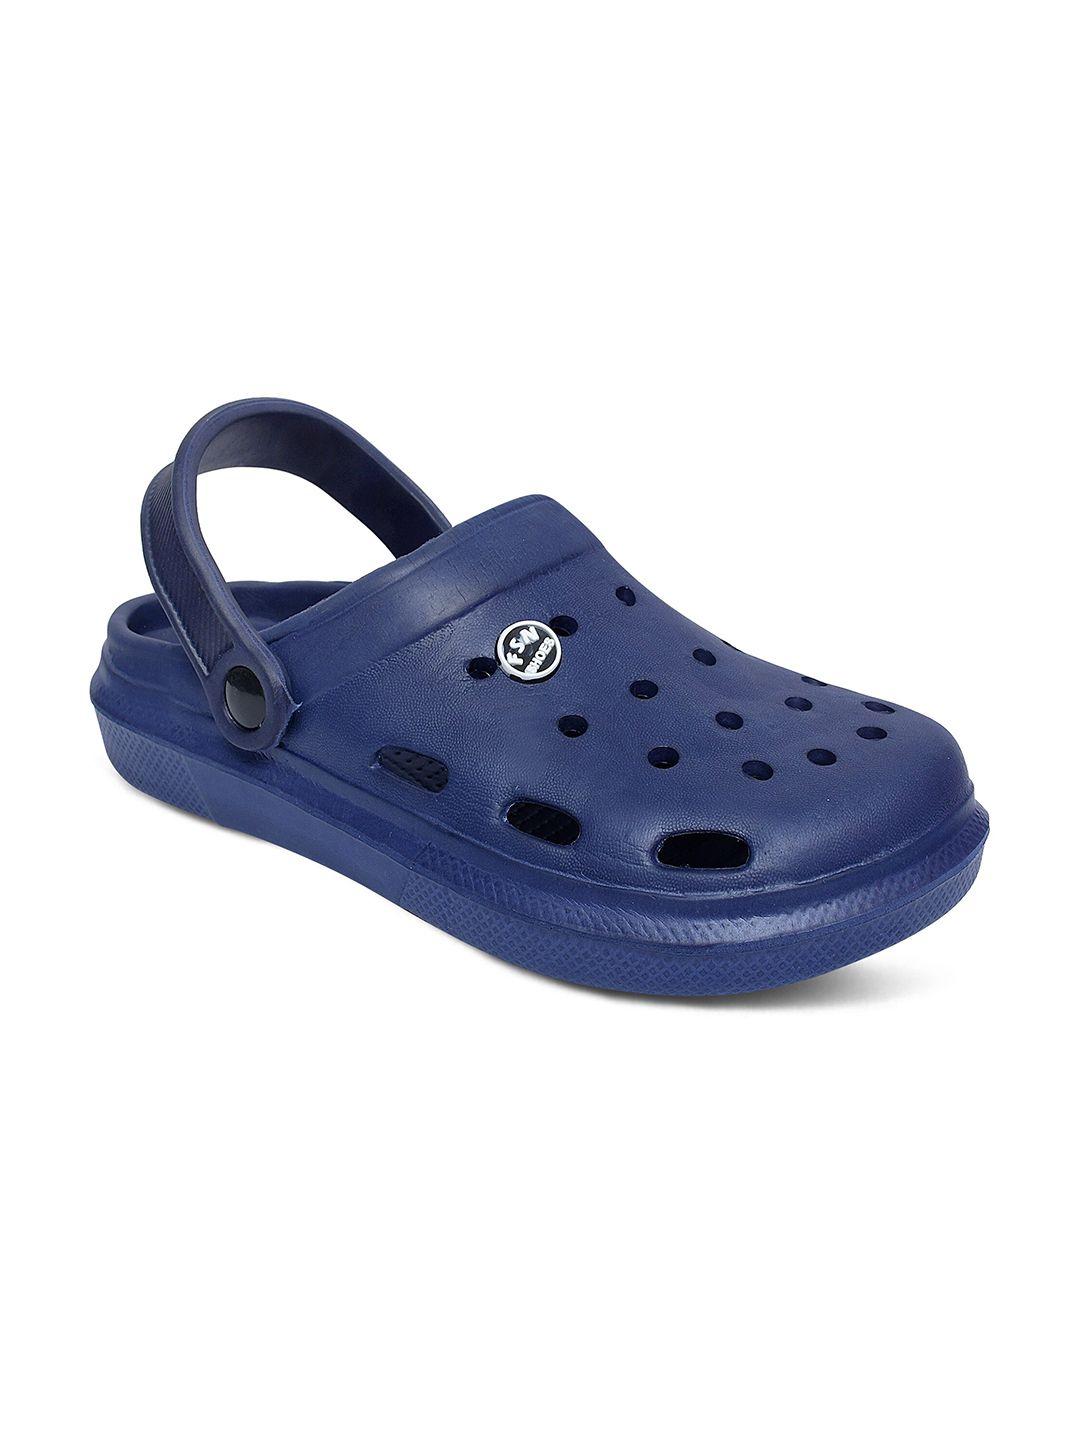 airspot unisex navy blue clogs sandals